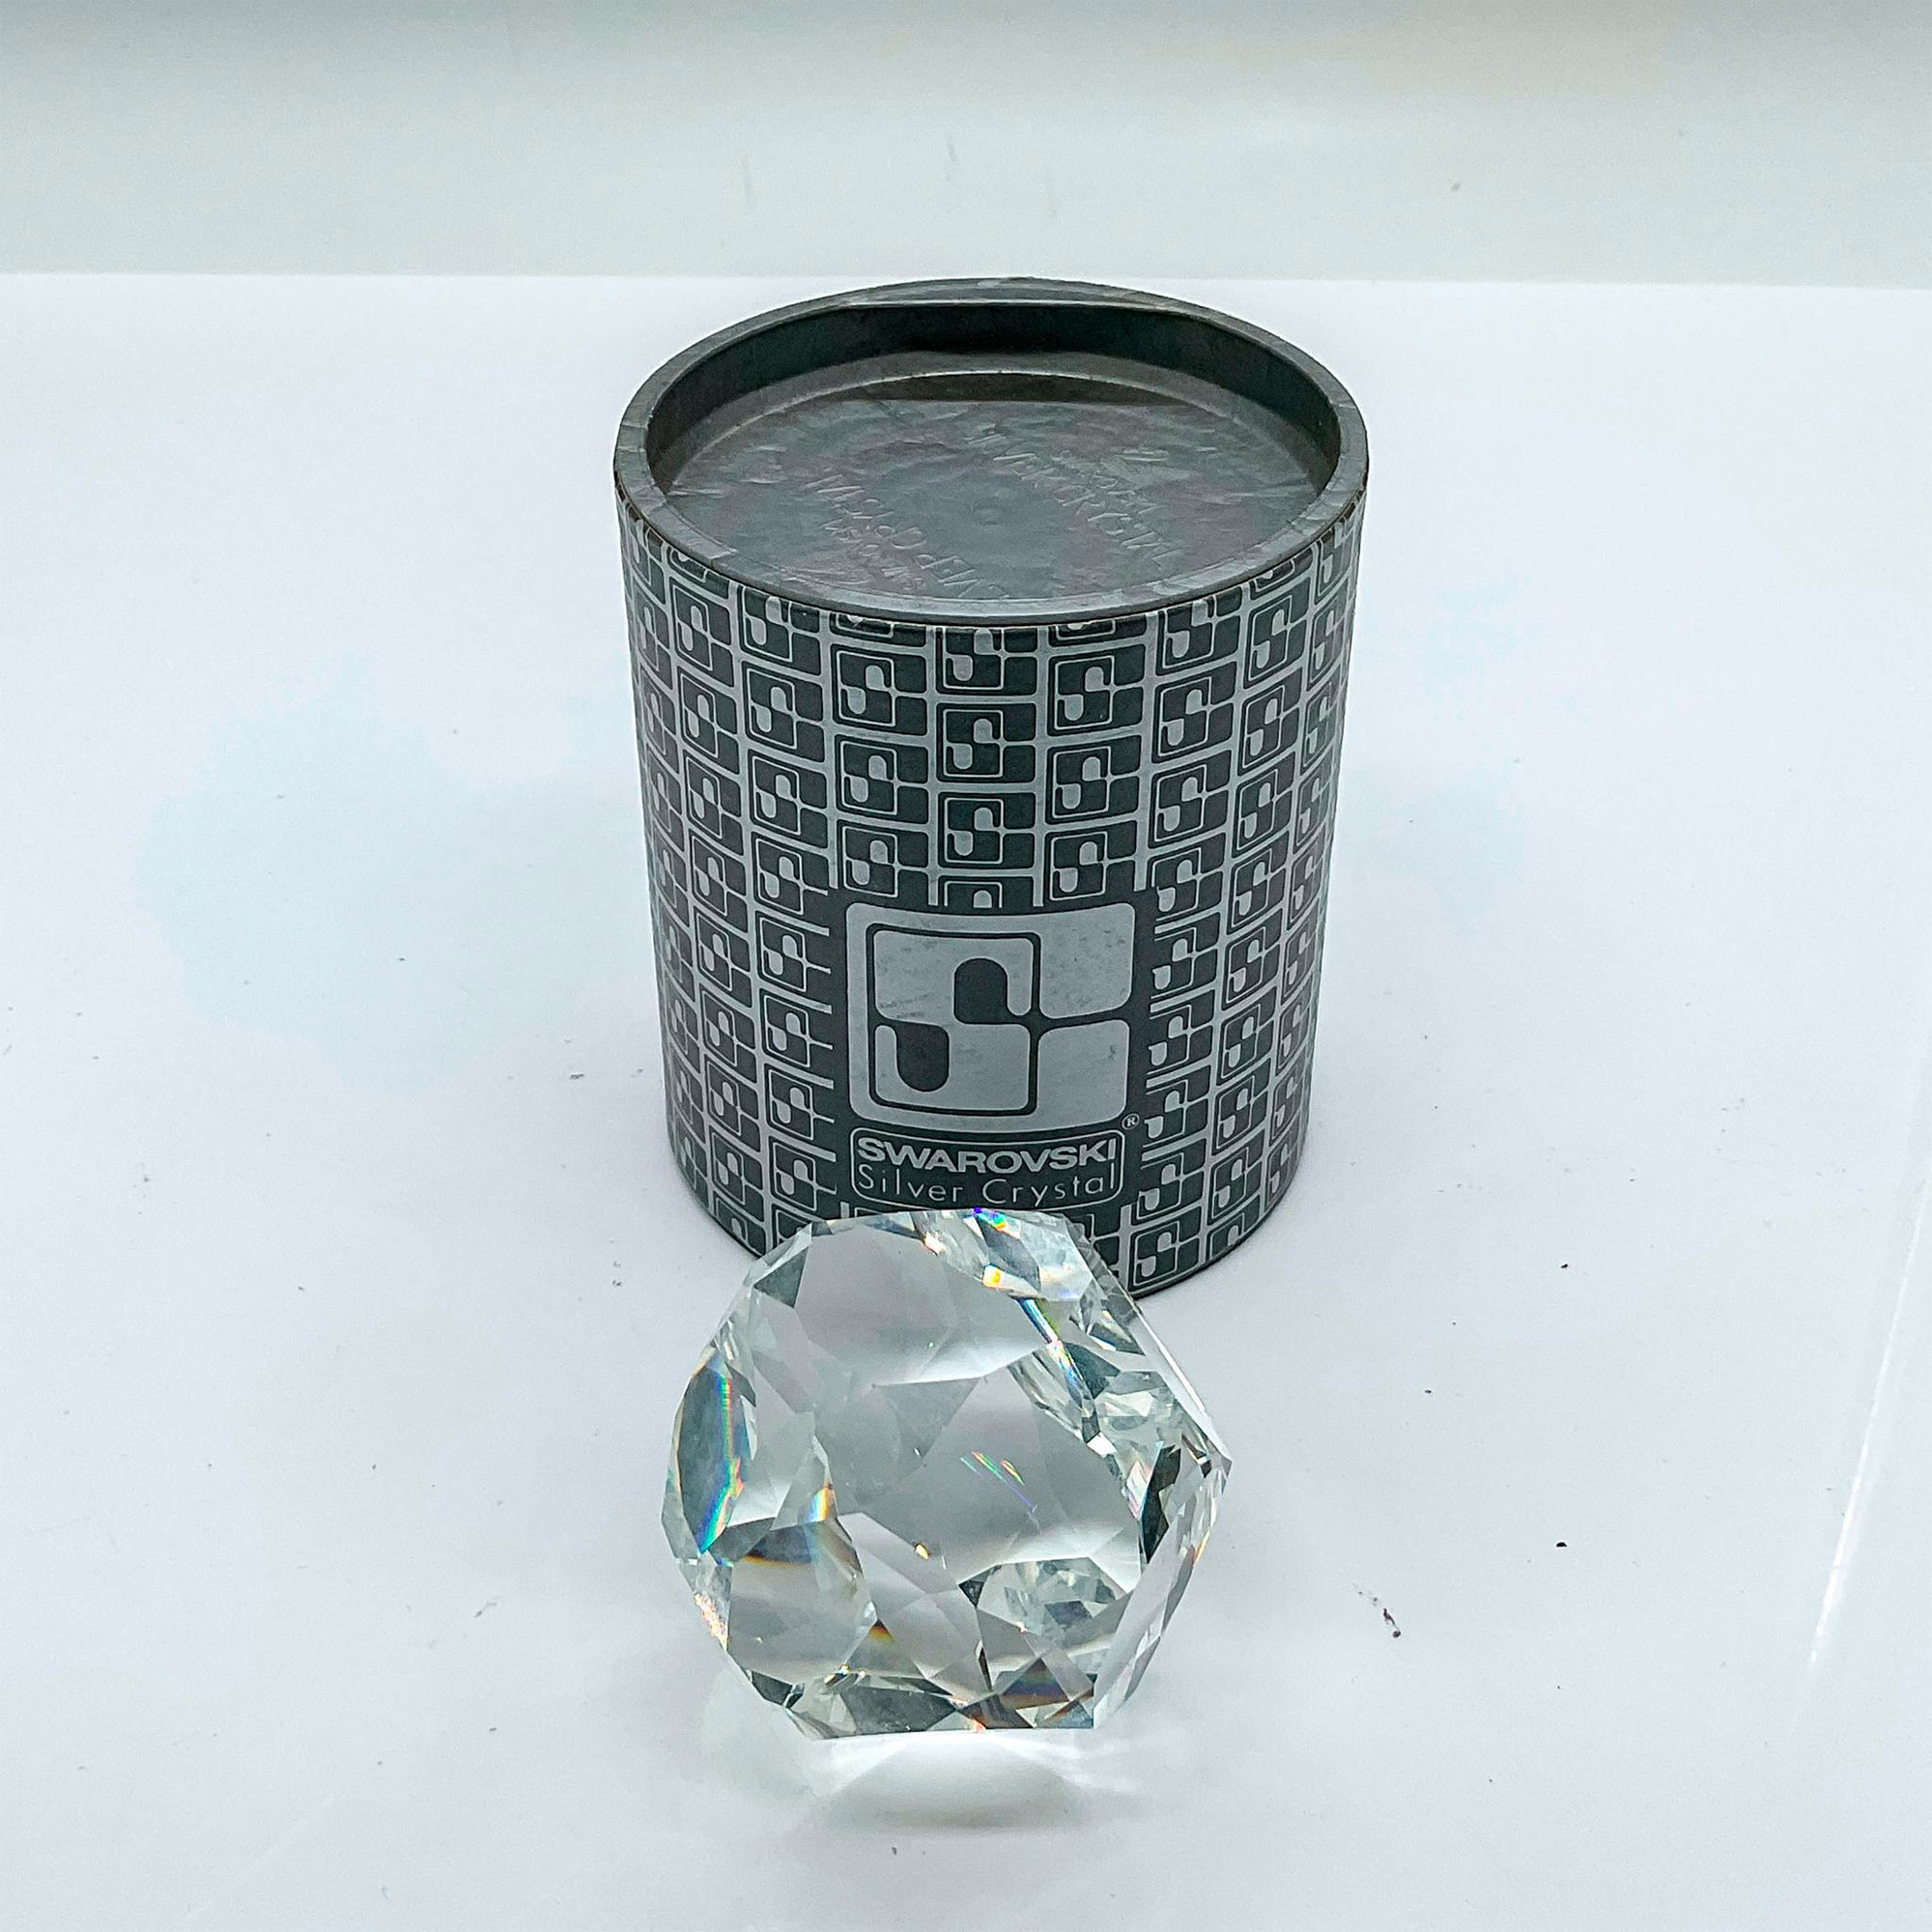 Swarovski Silver Crystal Geometric Paperweight - Image 3 of 3